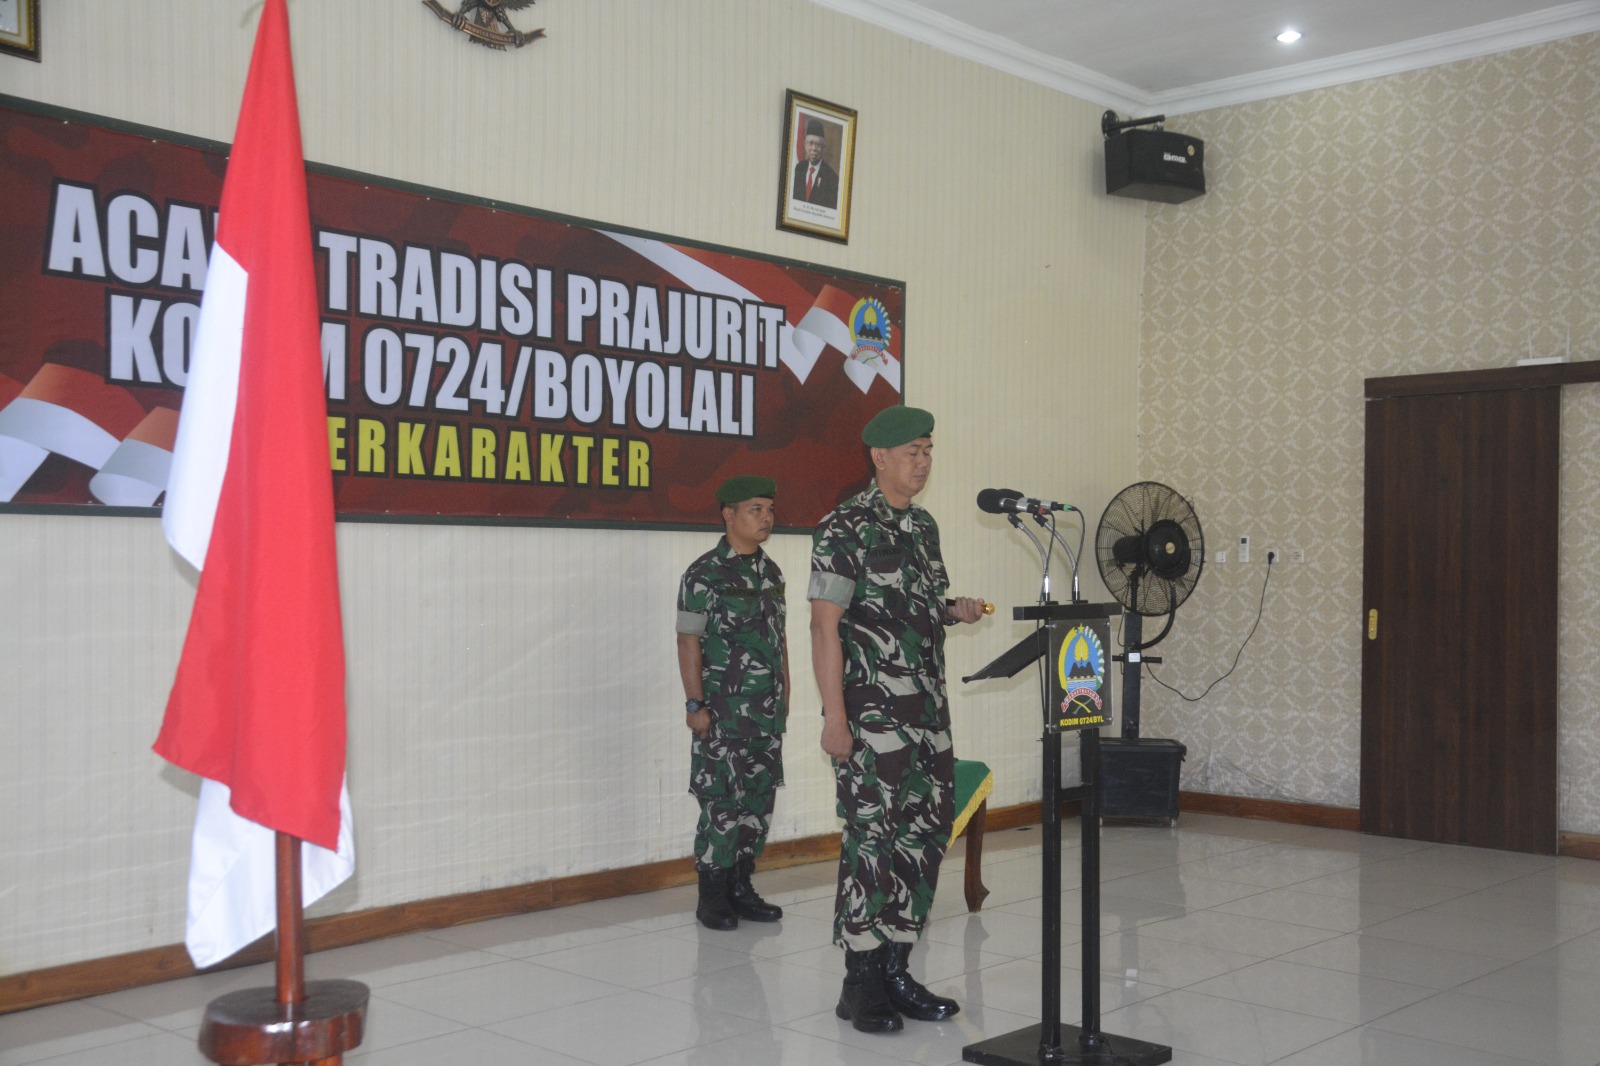 Dandim 0724/Boyolali Pimpin Korps Raport Pindah Satuan Perwira Kodim